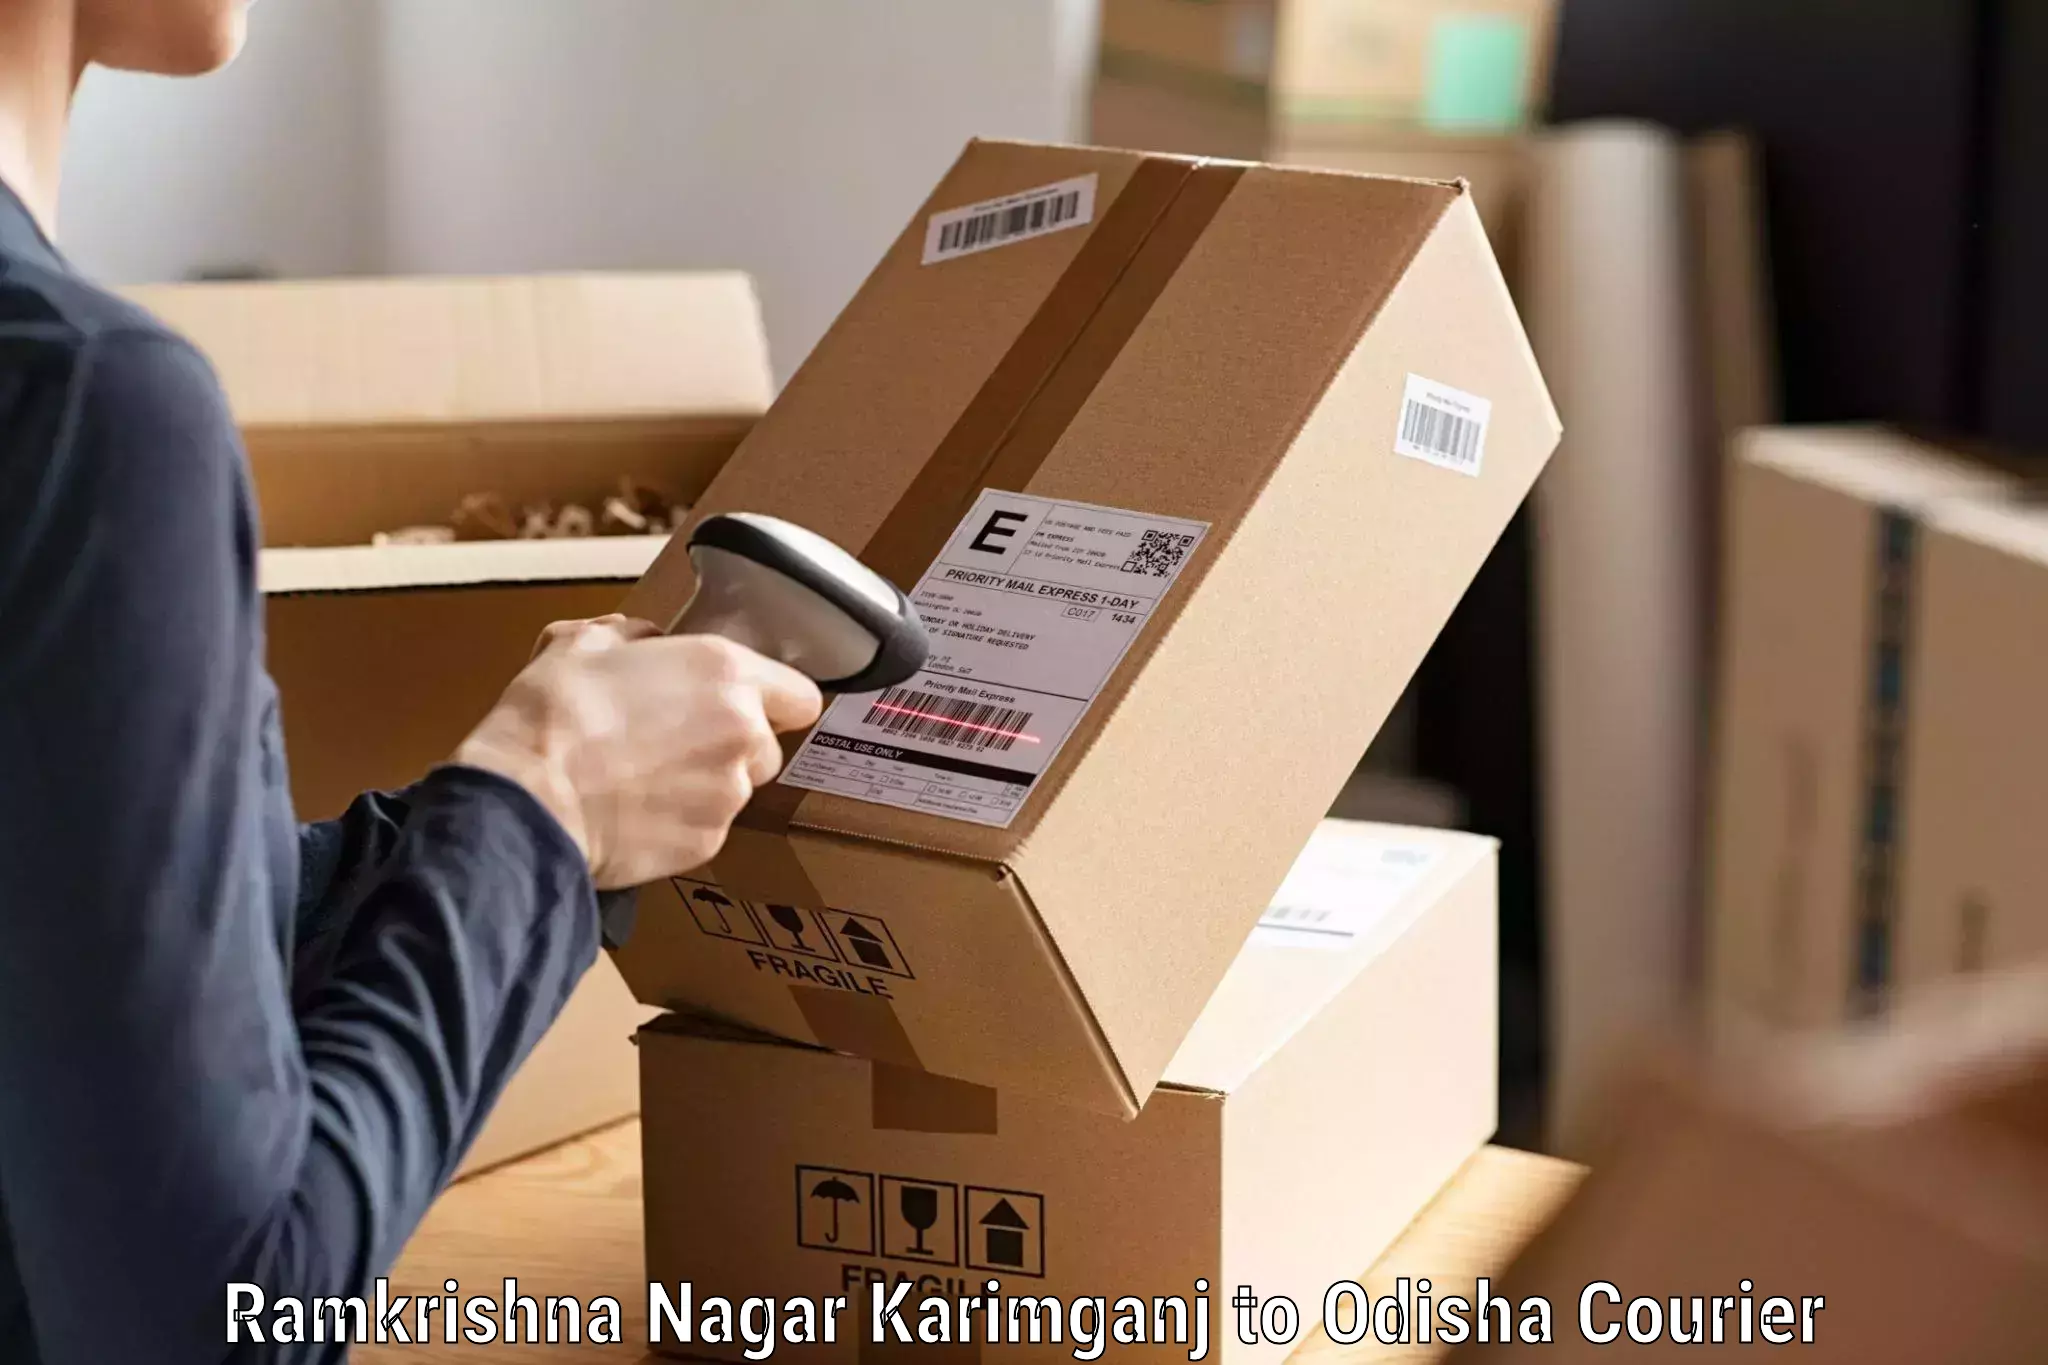 Easy access courier services Ramkrishna Nagar Karimganj to Kantabanji